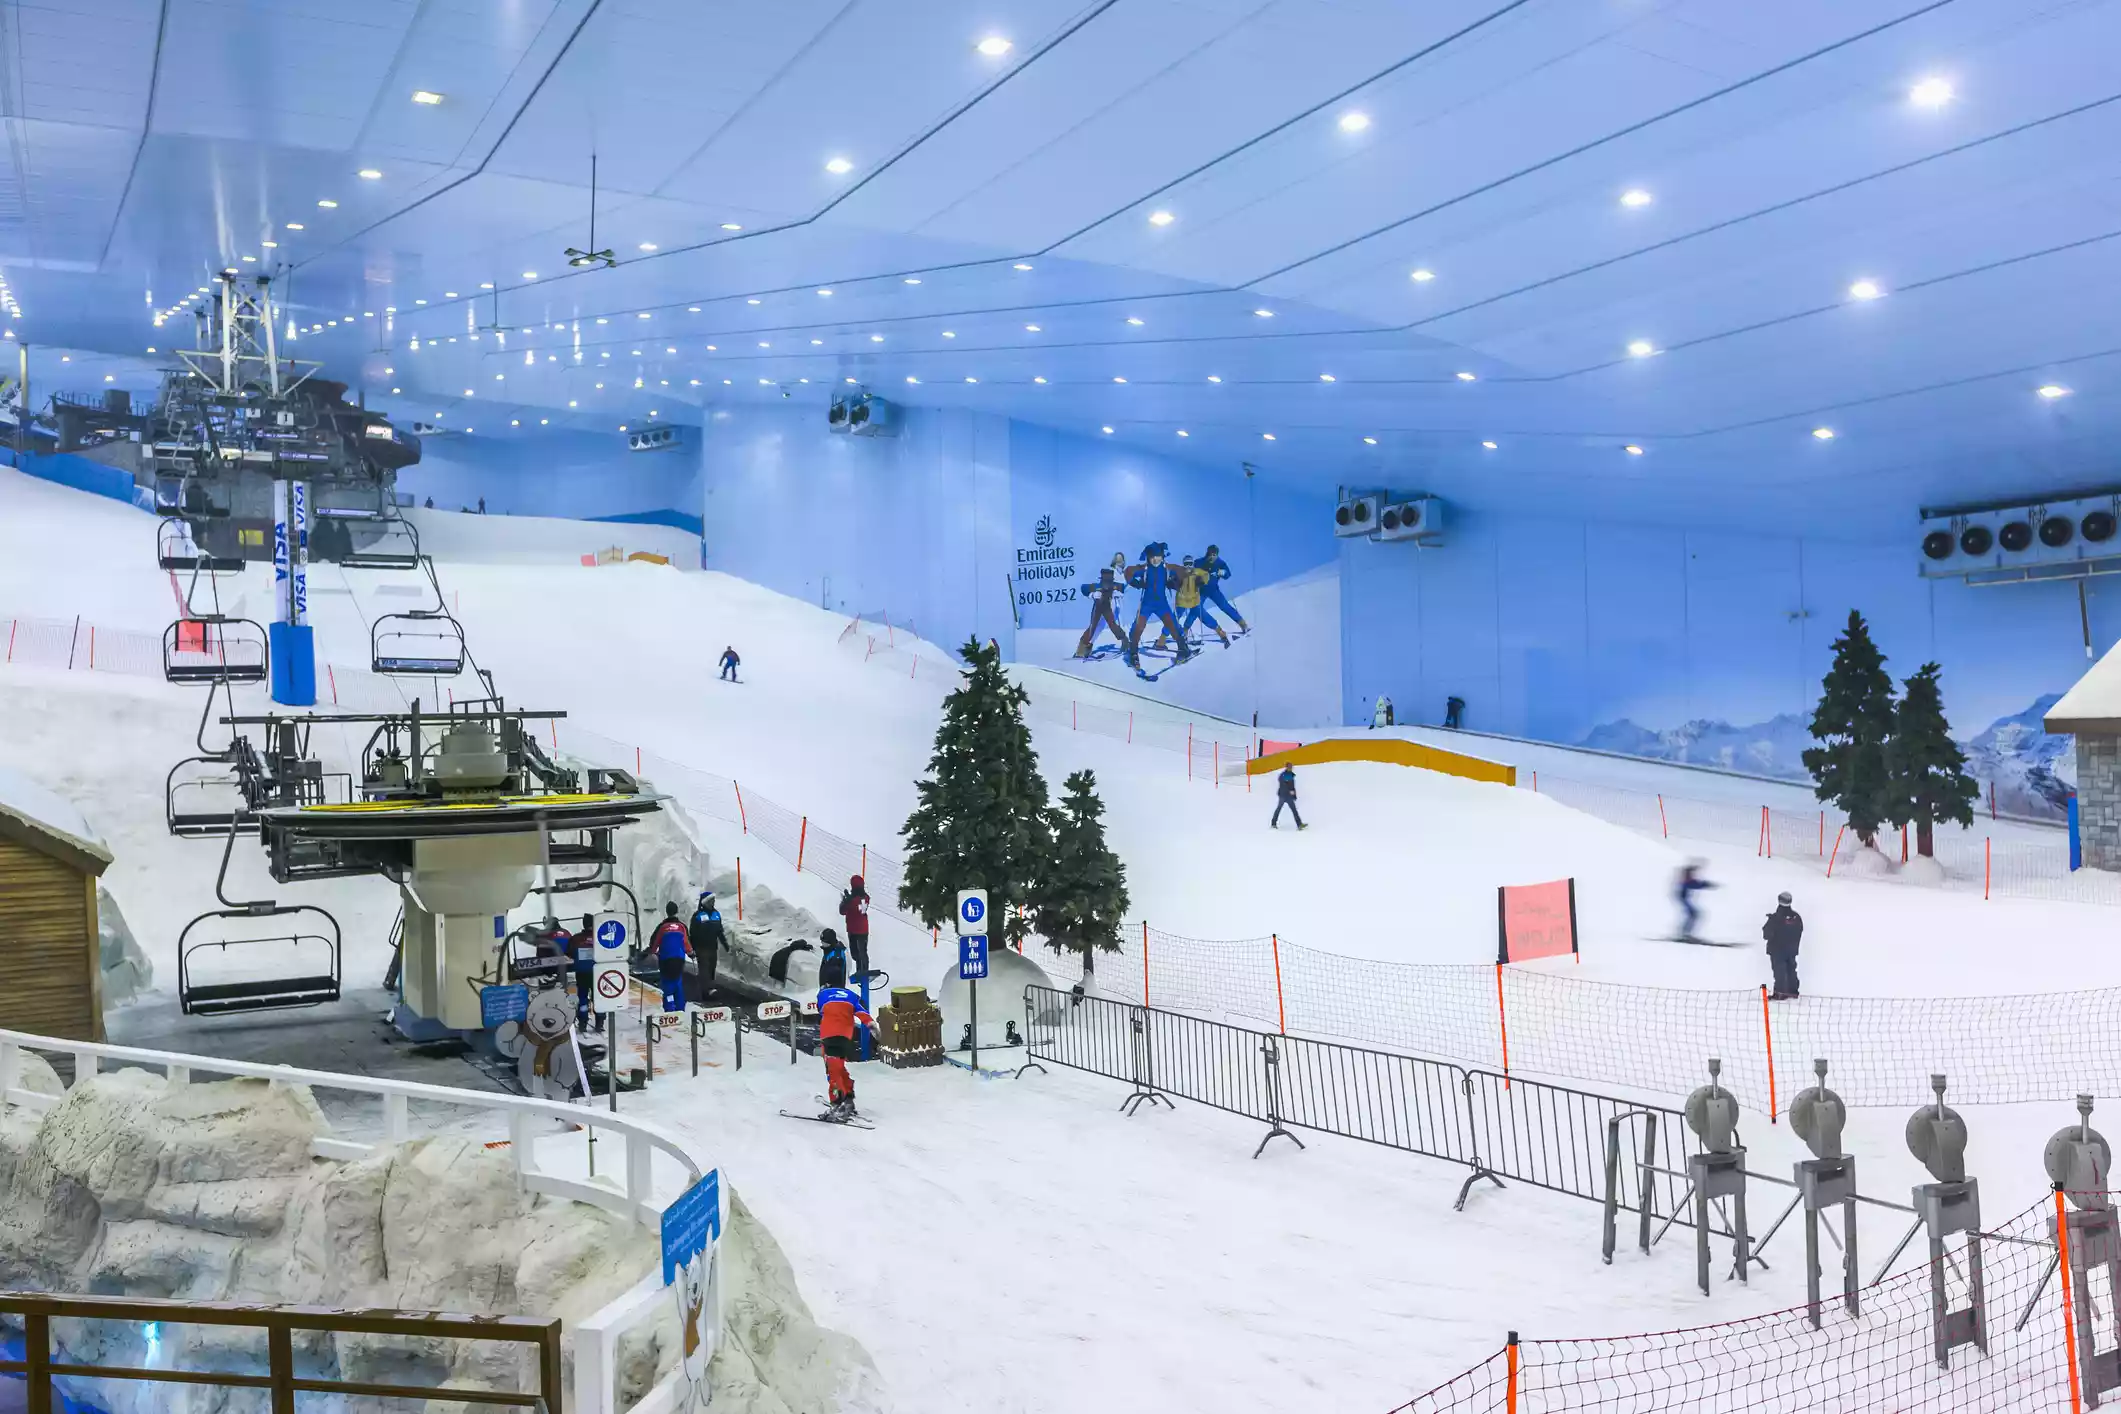 Ski Dubai at Mall of the Emirates indoor ski area with ski lift, trees, and white snow